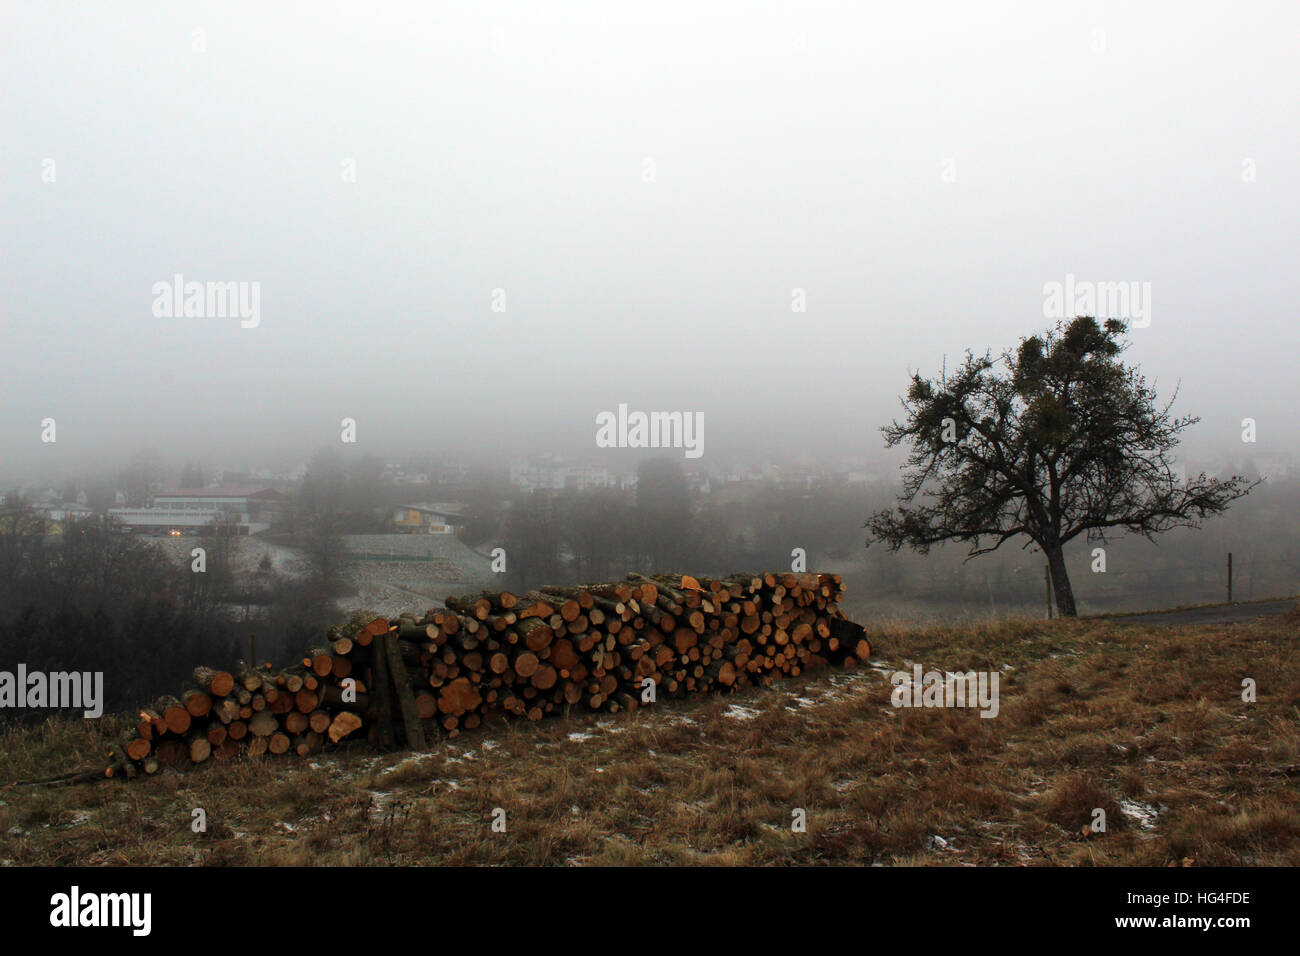 Firewood near a tree, behind a foggy landscape Stock Photo